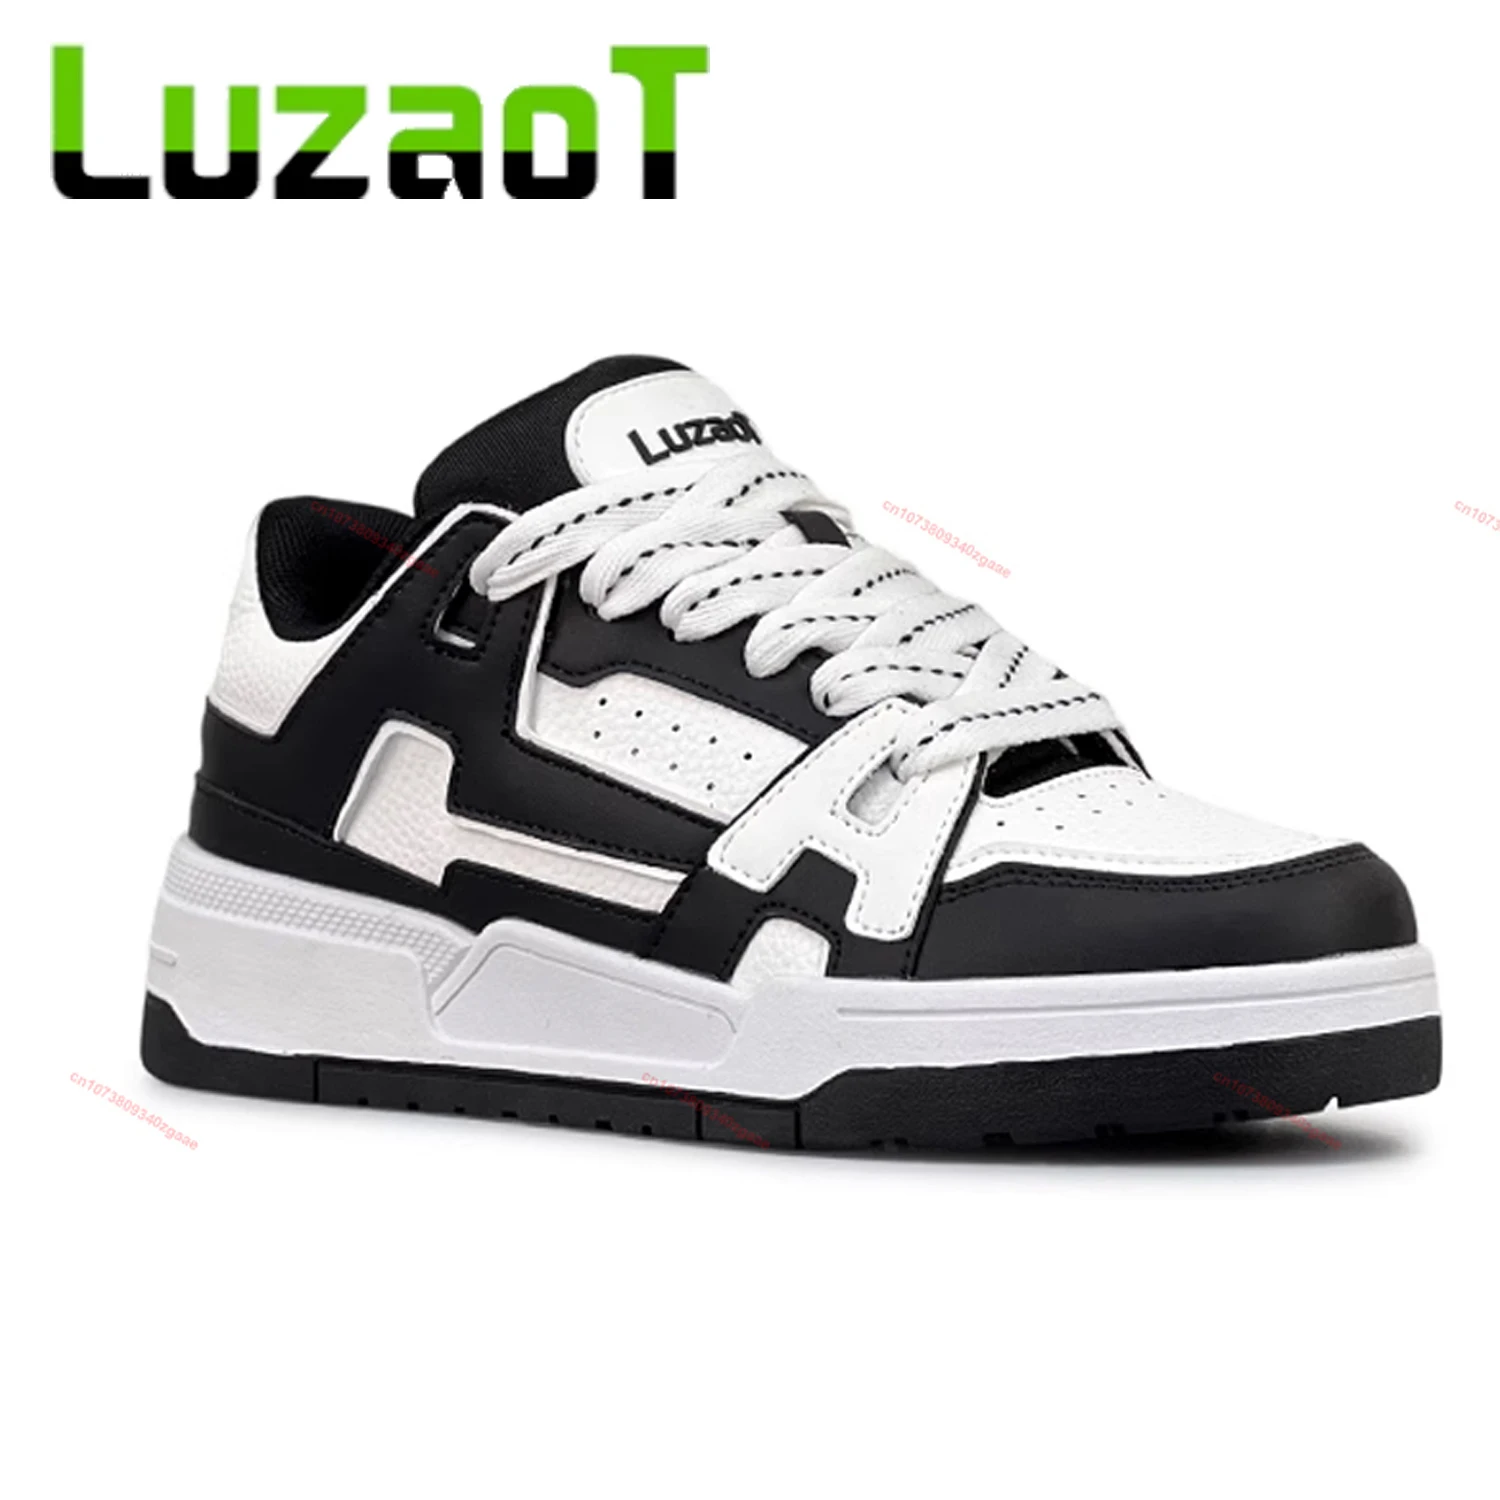 LUZAOT-Skateboard-Sneakers-Men-Y2k-Sneakers-Retro-Classic-Black-White ...